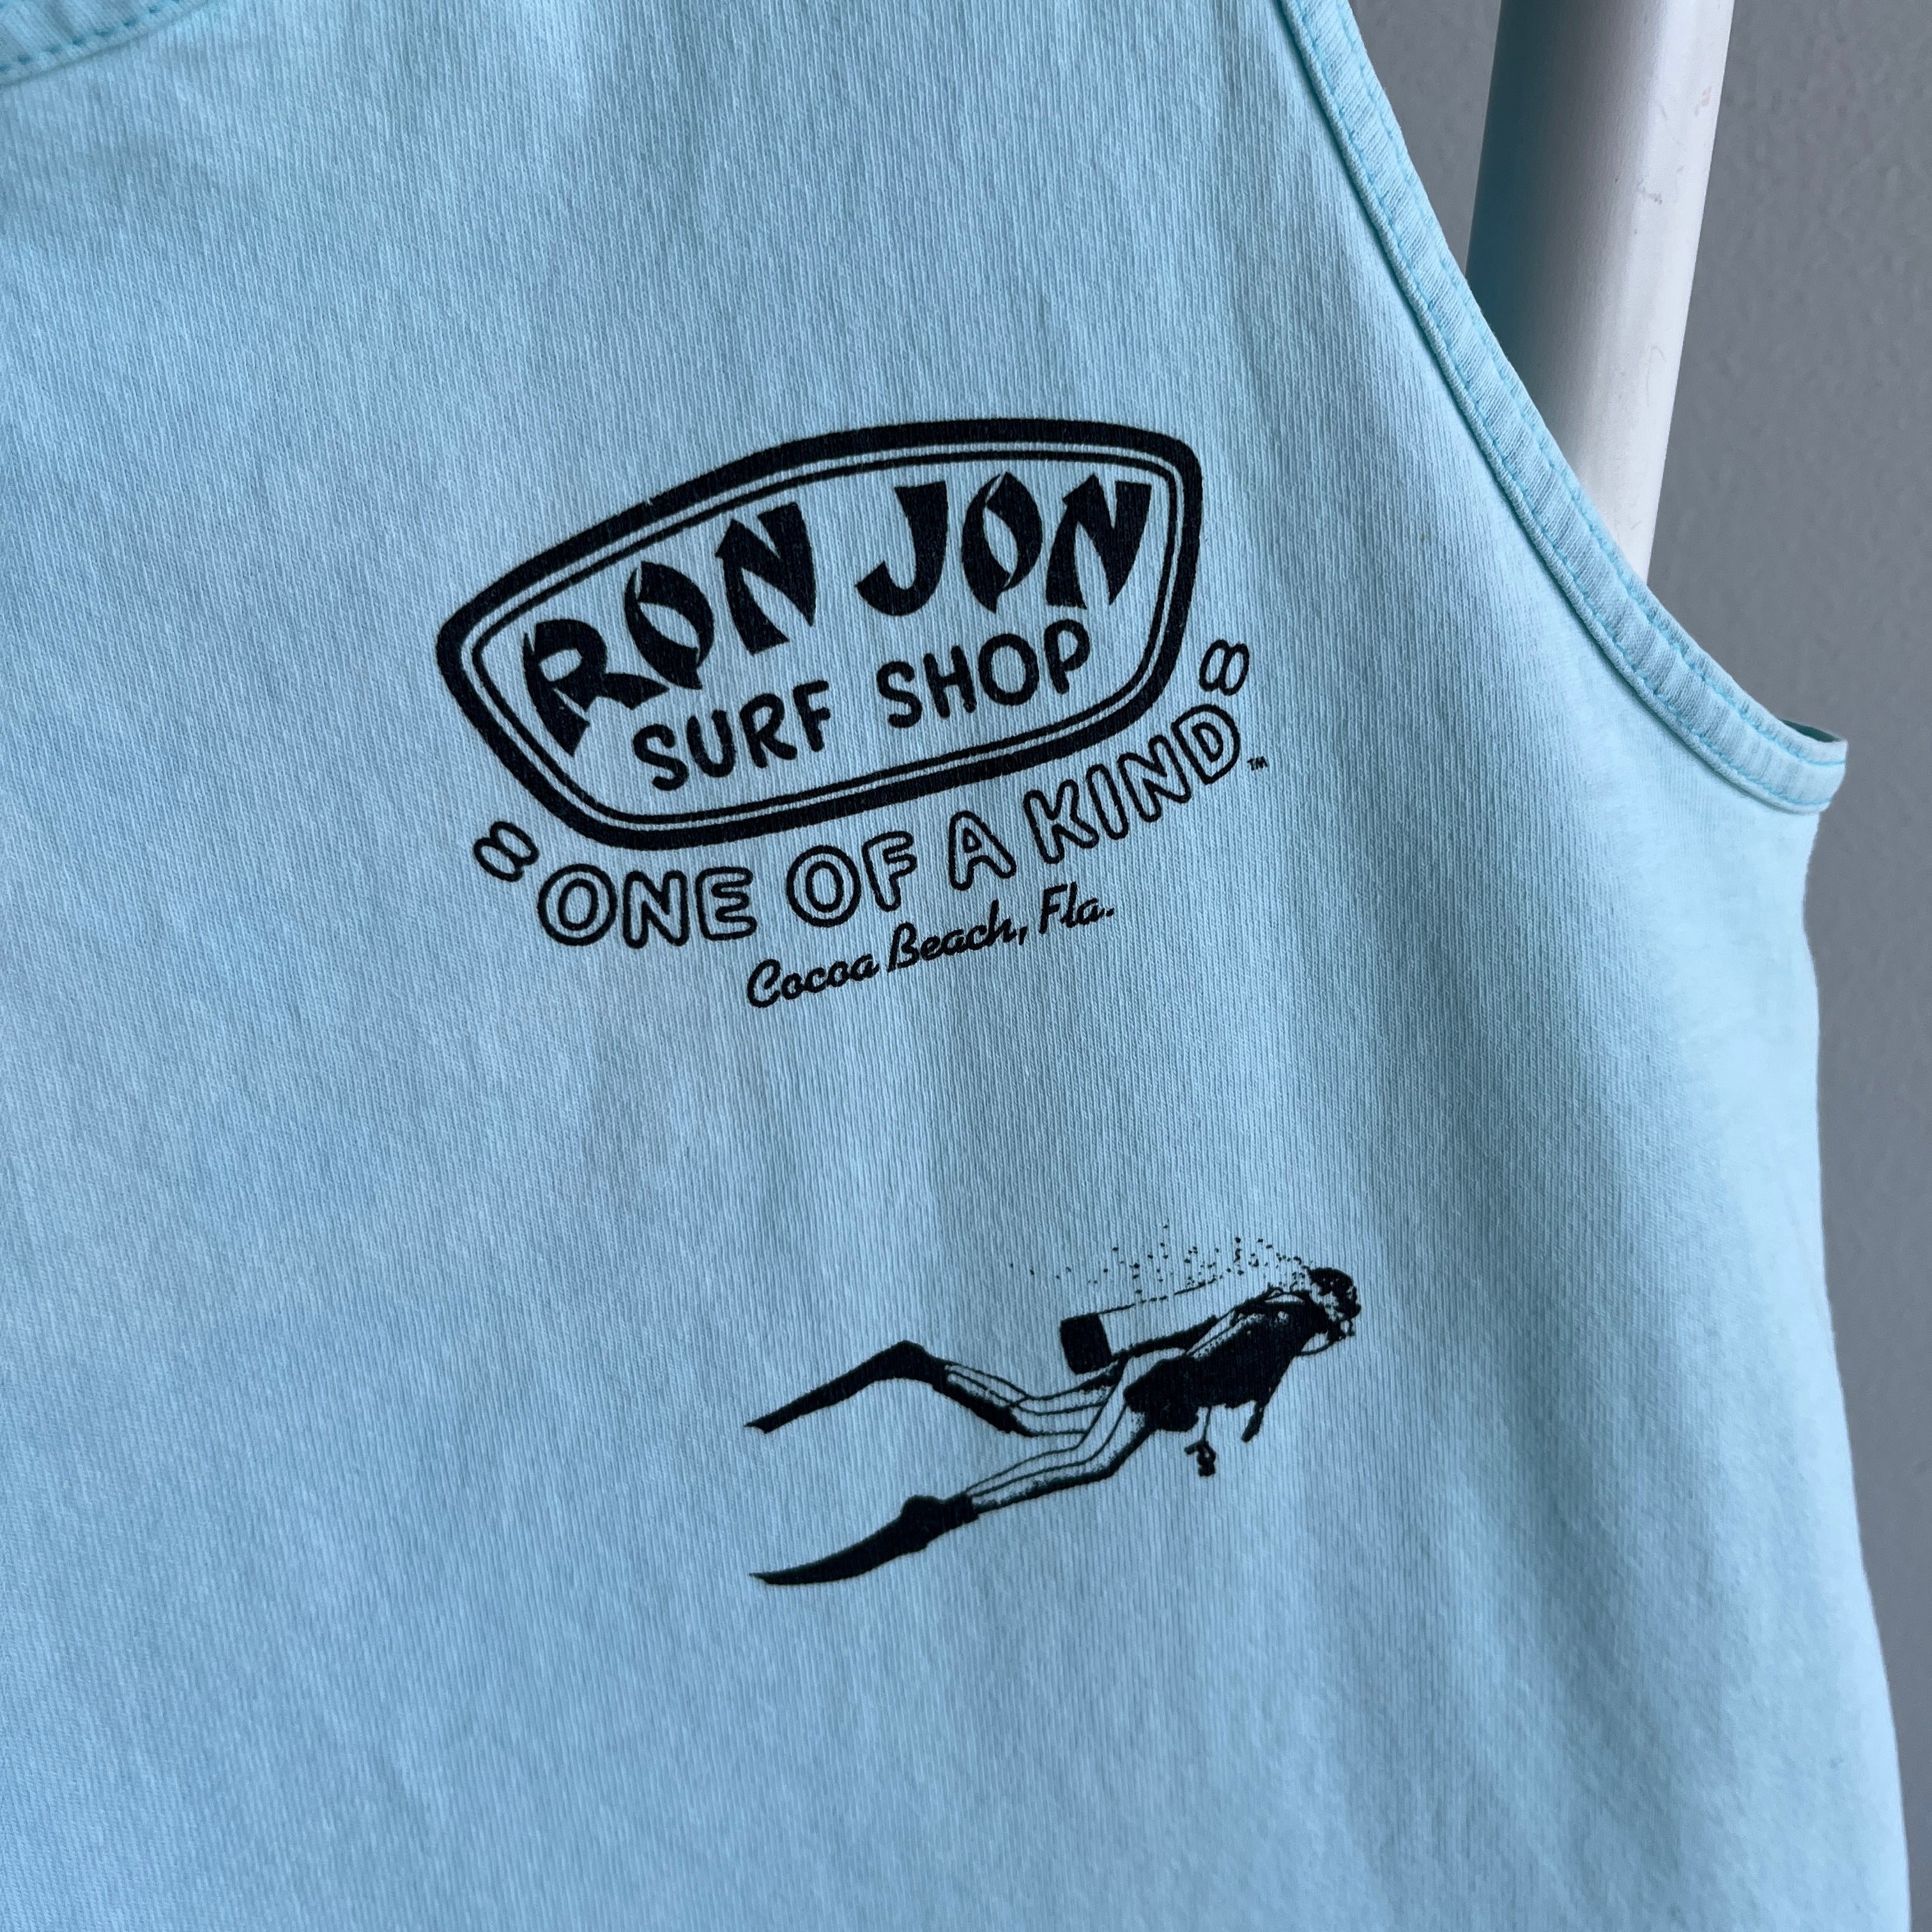 1989 Ron Jon Surf Shop Tank Top